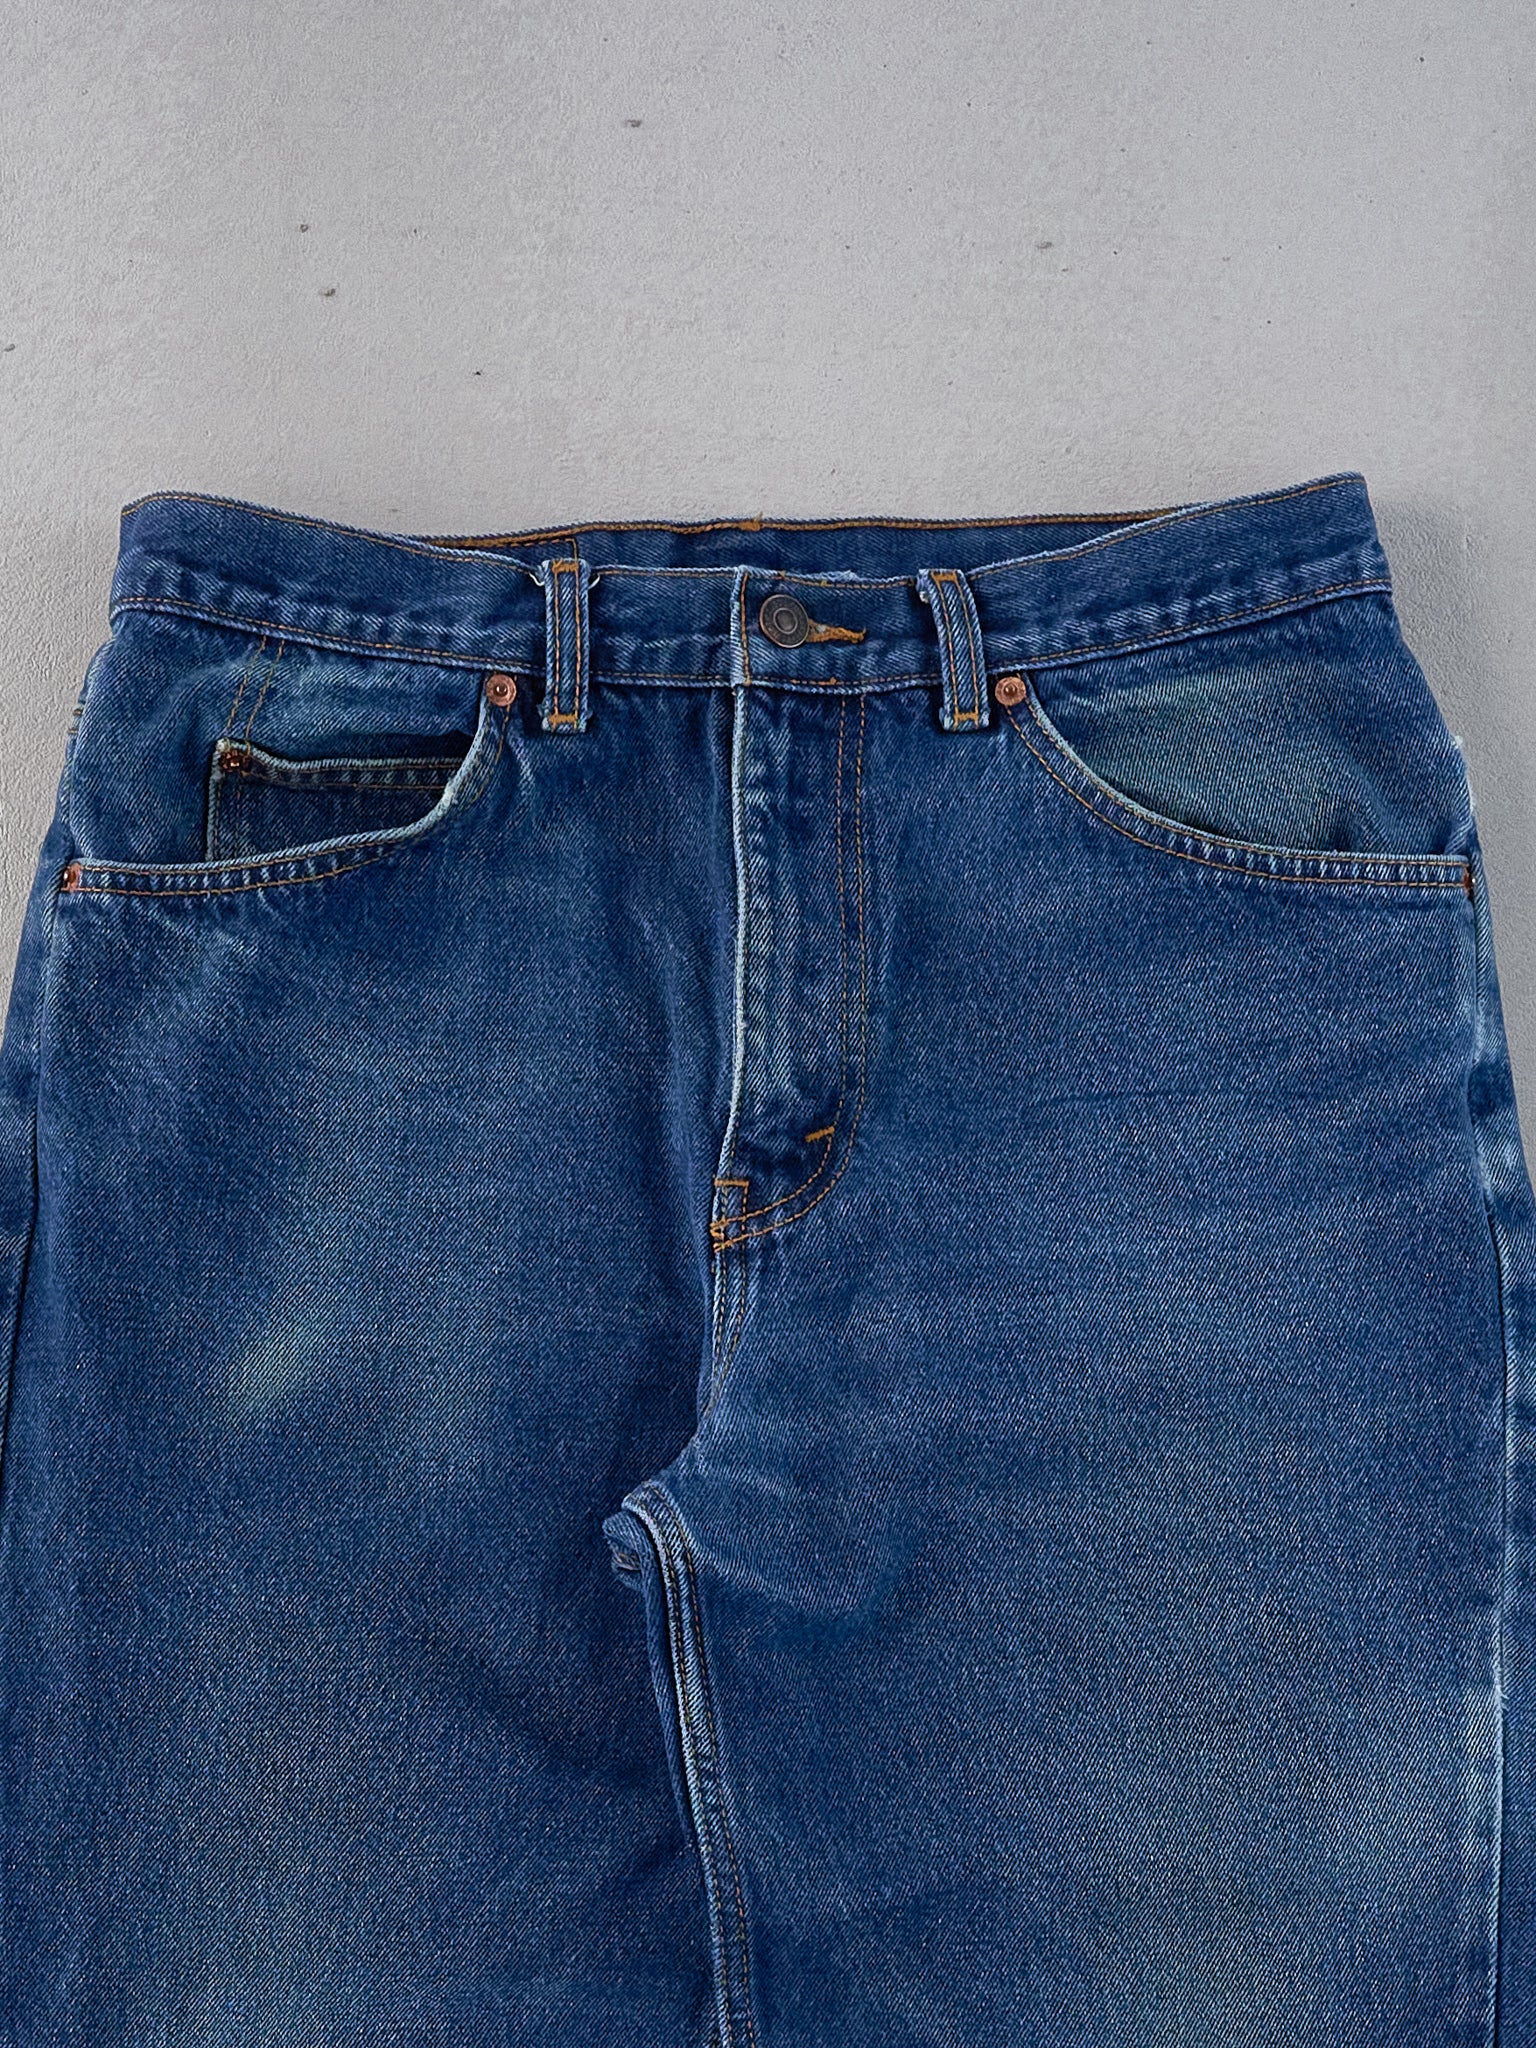 Vintage 70s Dark Blue Levi's Denim Jeans (31x29)